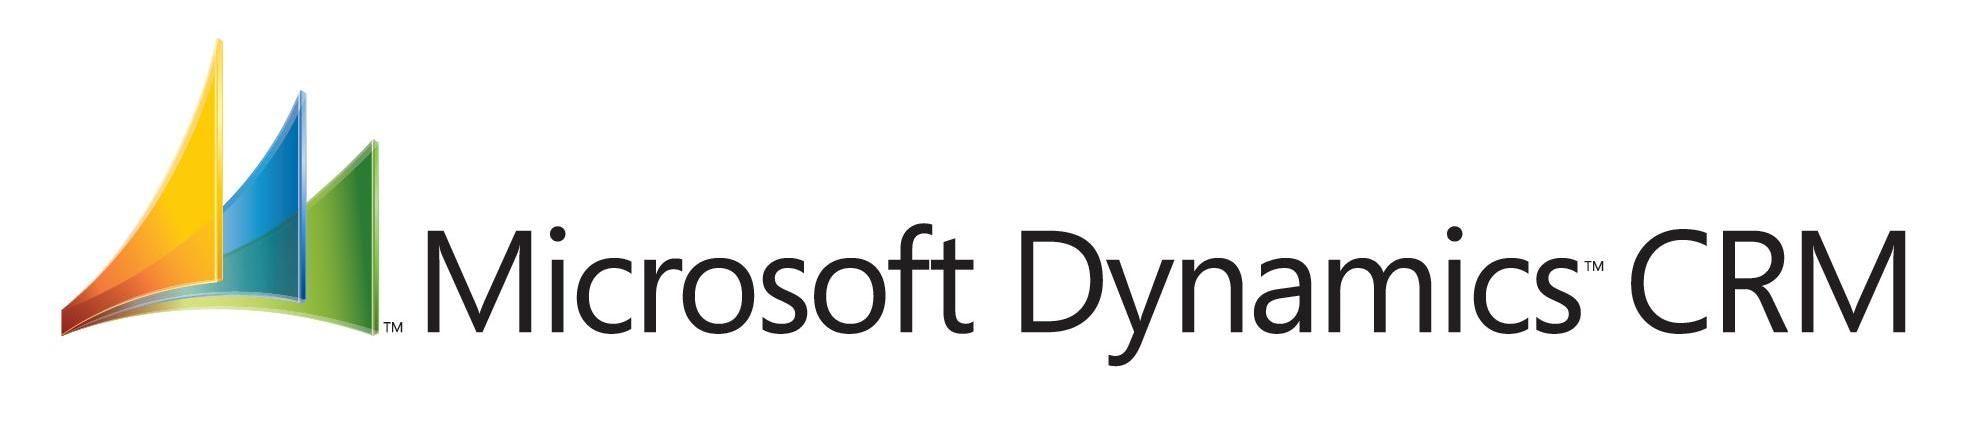 Microsoft Dynamics CRM Logo - Microsoft Dynamics Customization & CRM Development | Techloyce